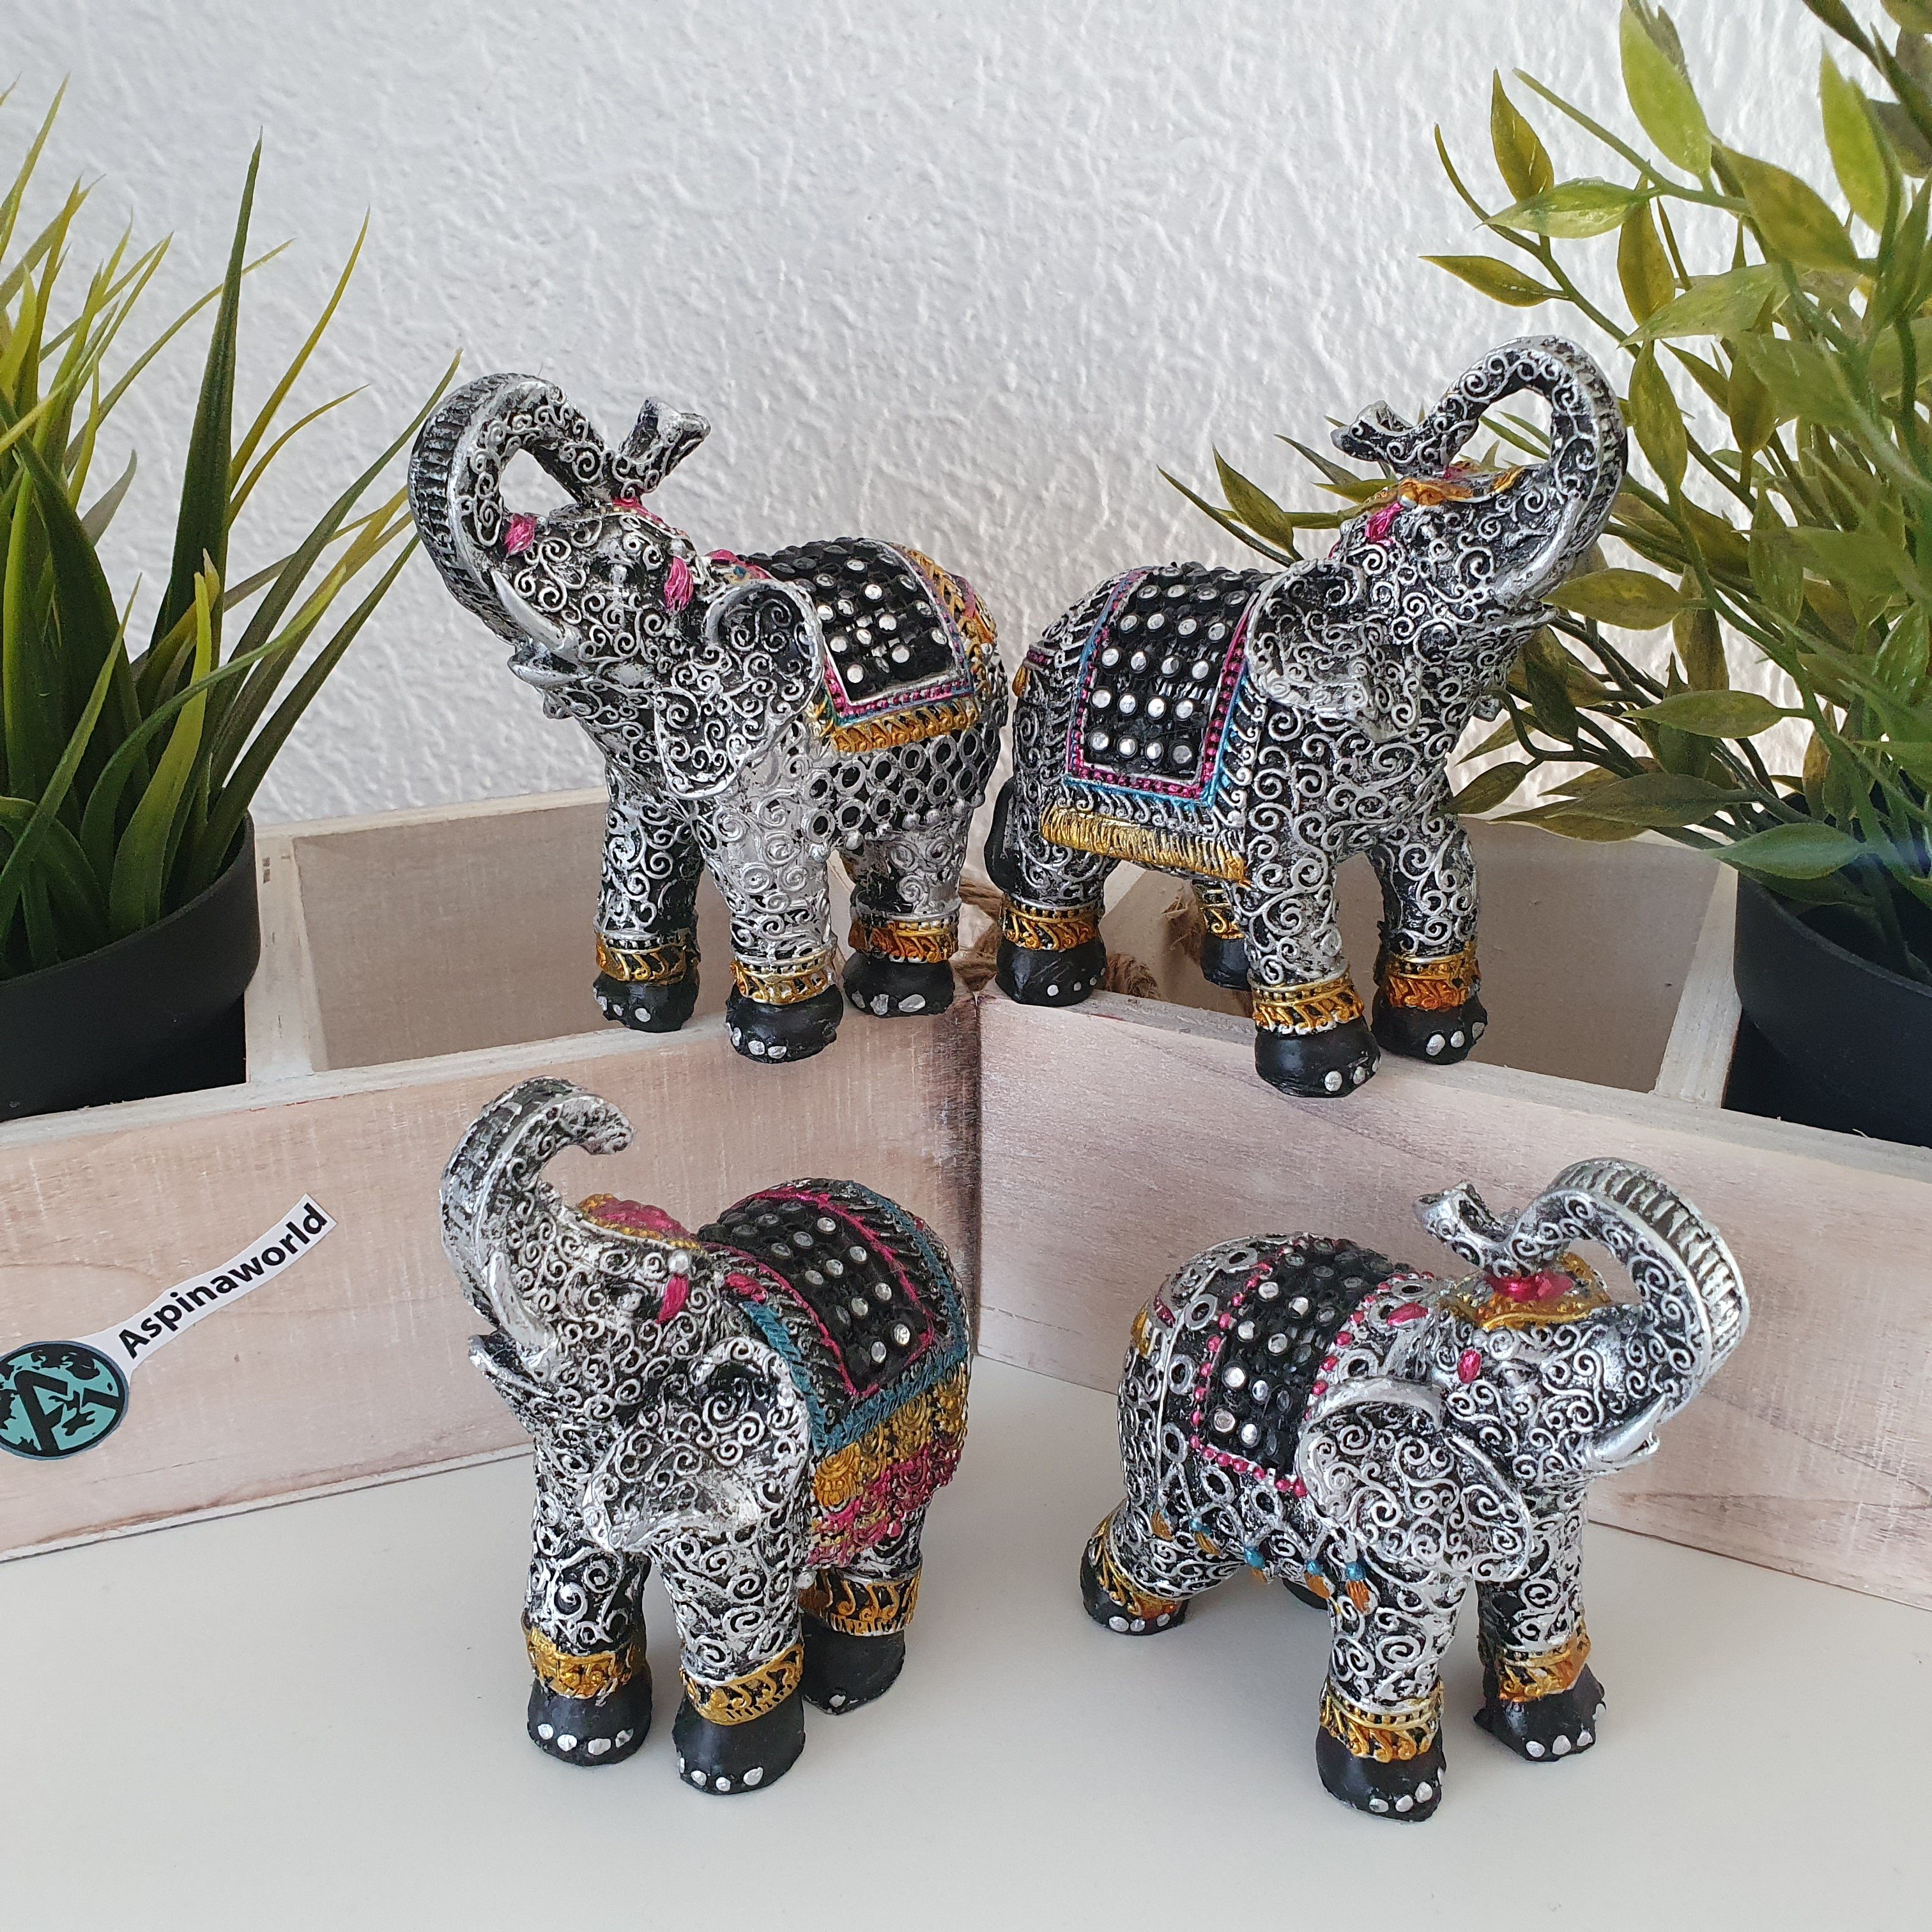 Aspinaworld Gartenfigur Elefanten Figuren im 4 er Set 10 cm